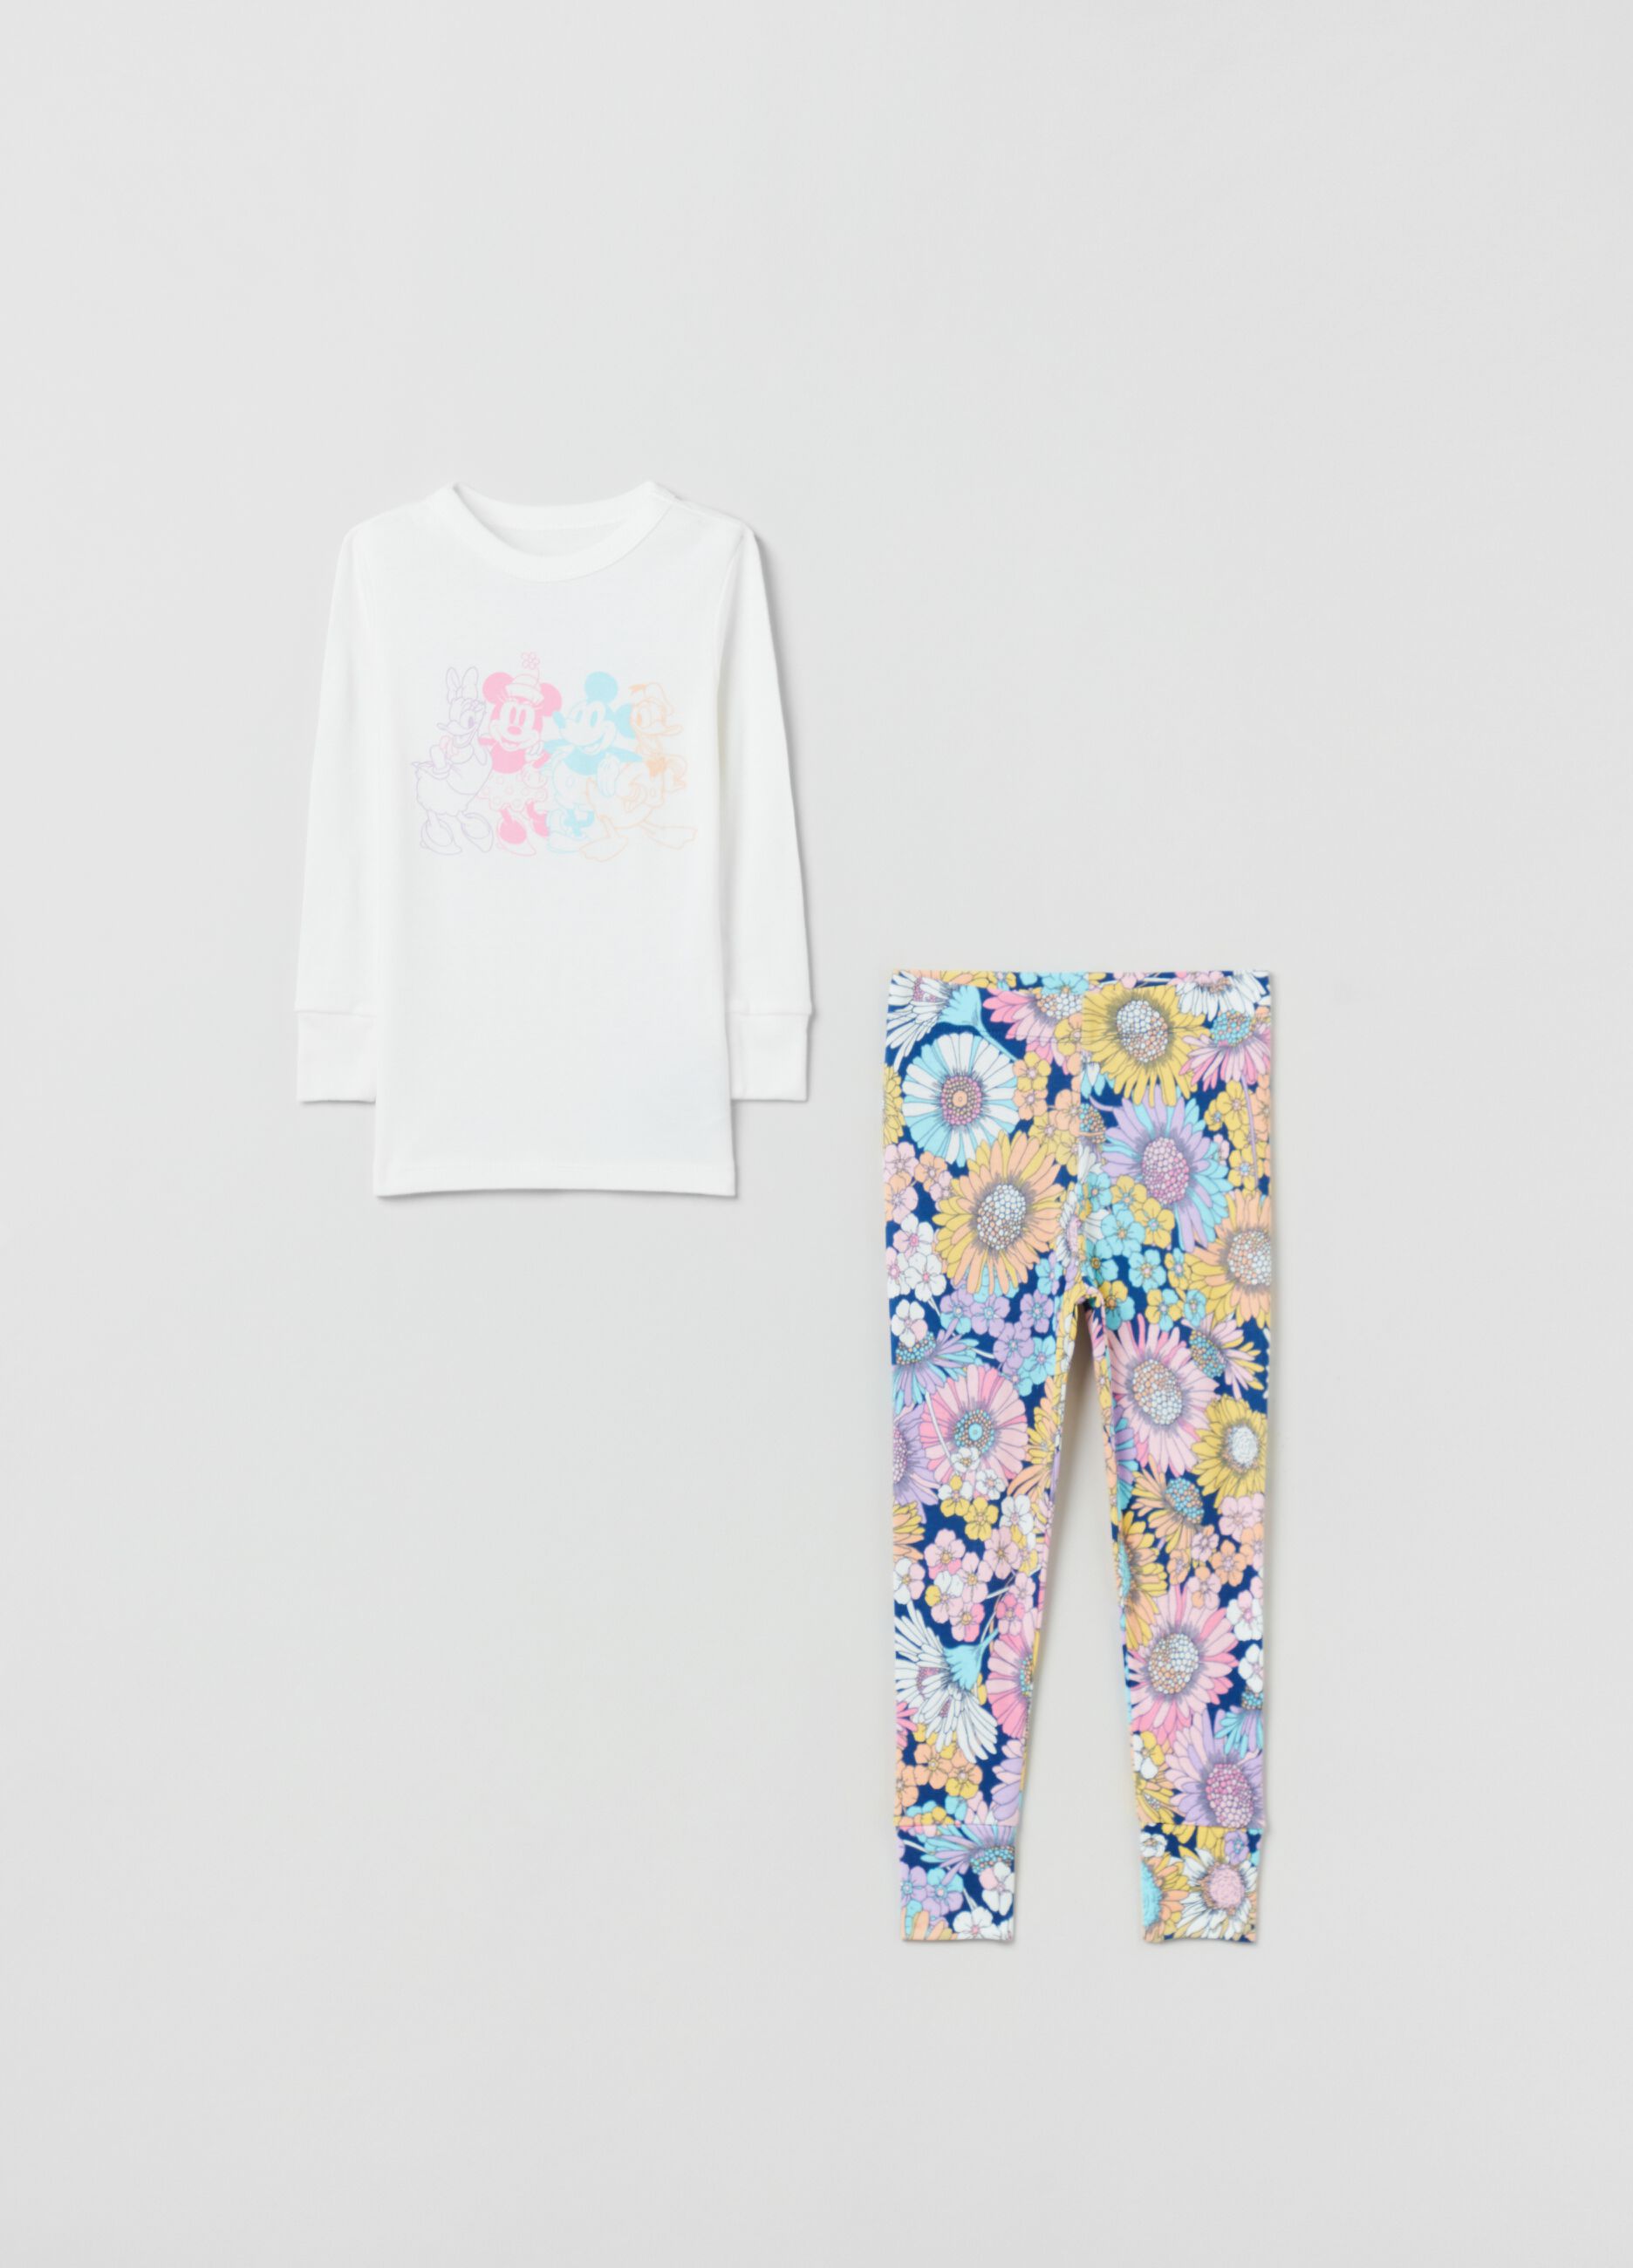 Cotton pyjamas with Disney character print